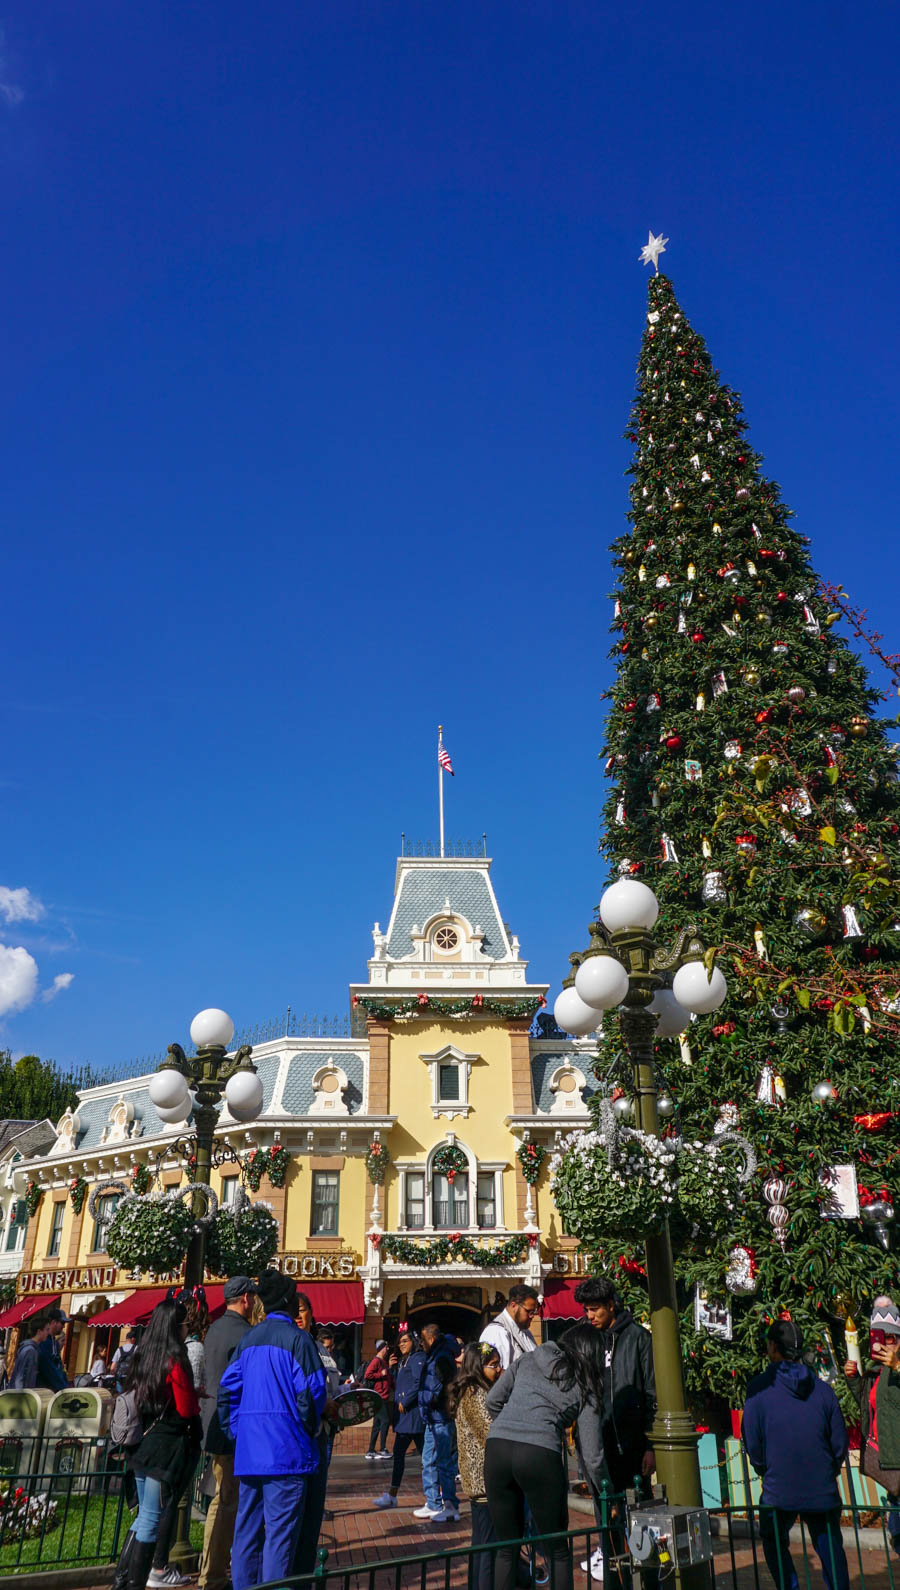 Waiting for the Christmas Walking Tour to begin at Disneyland 12/24/2019